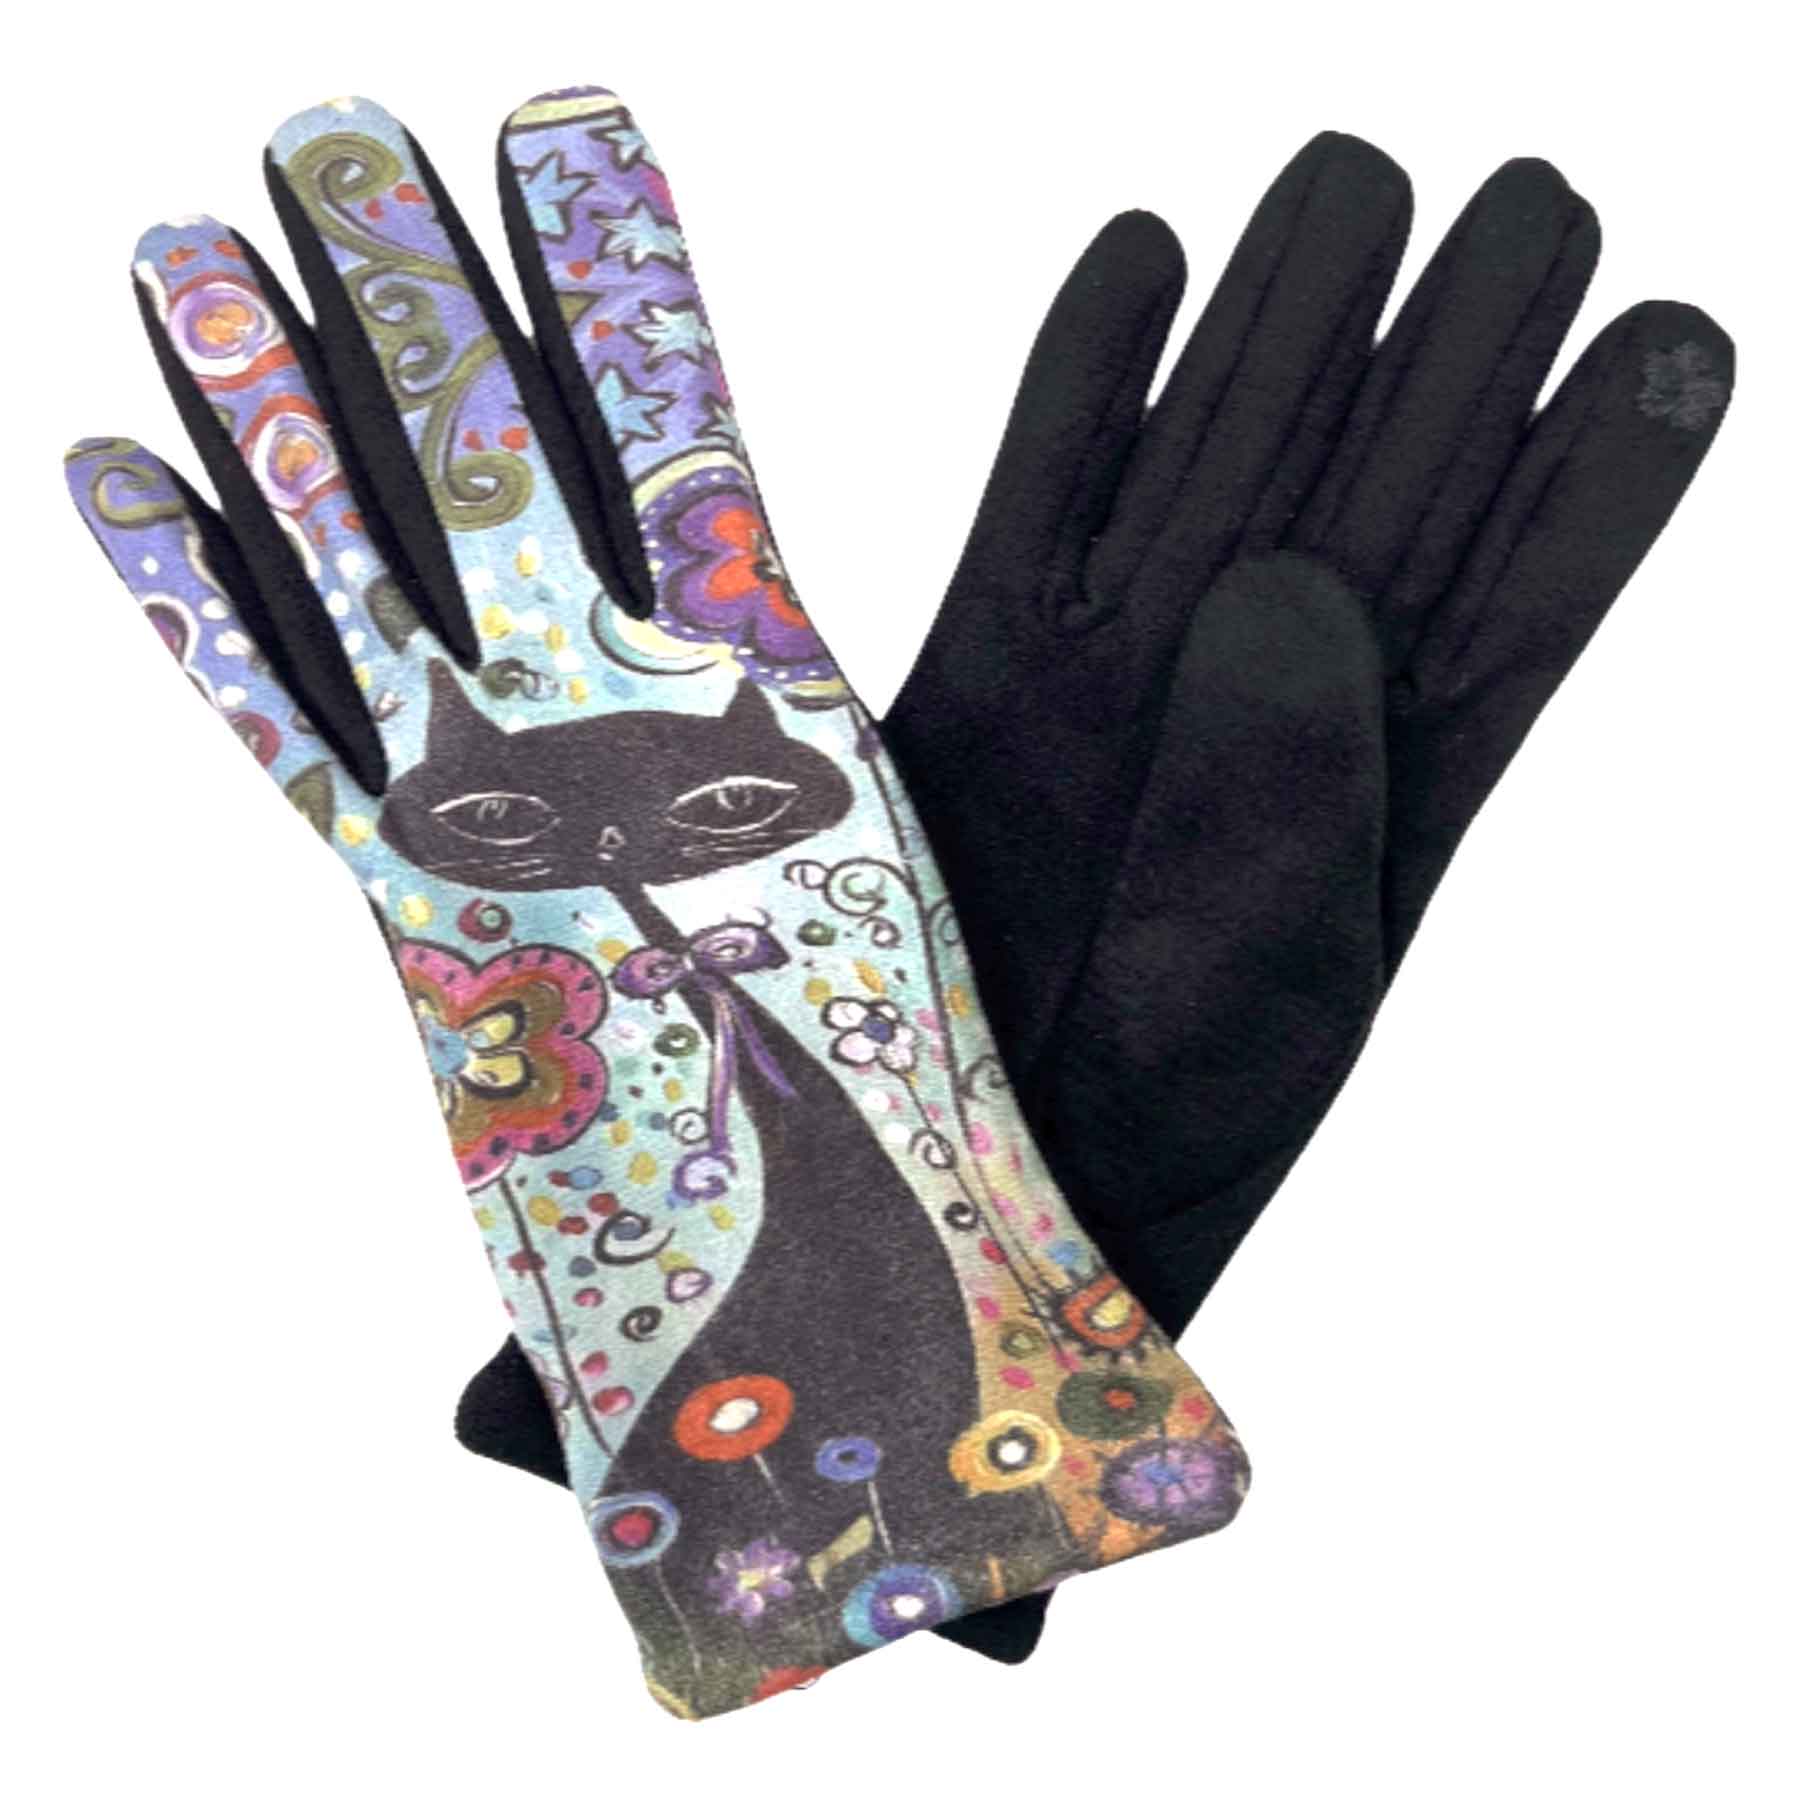 Art-34<br>
Touch Screen Gloves